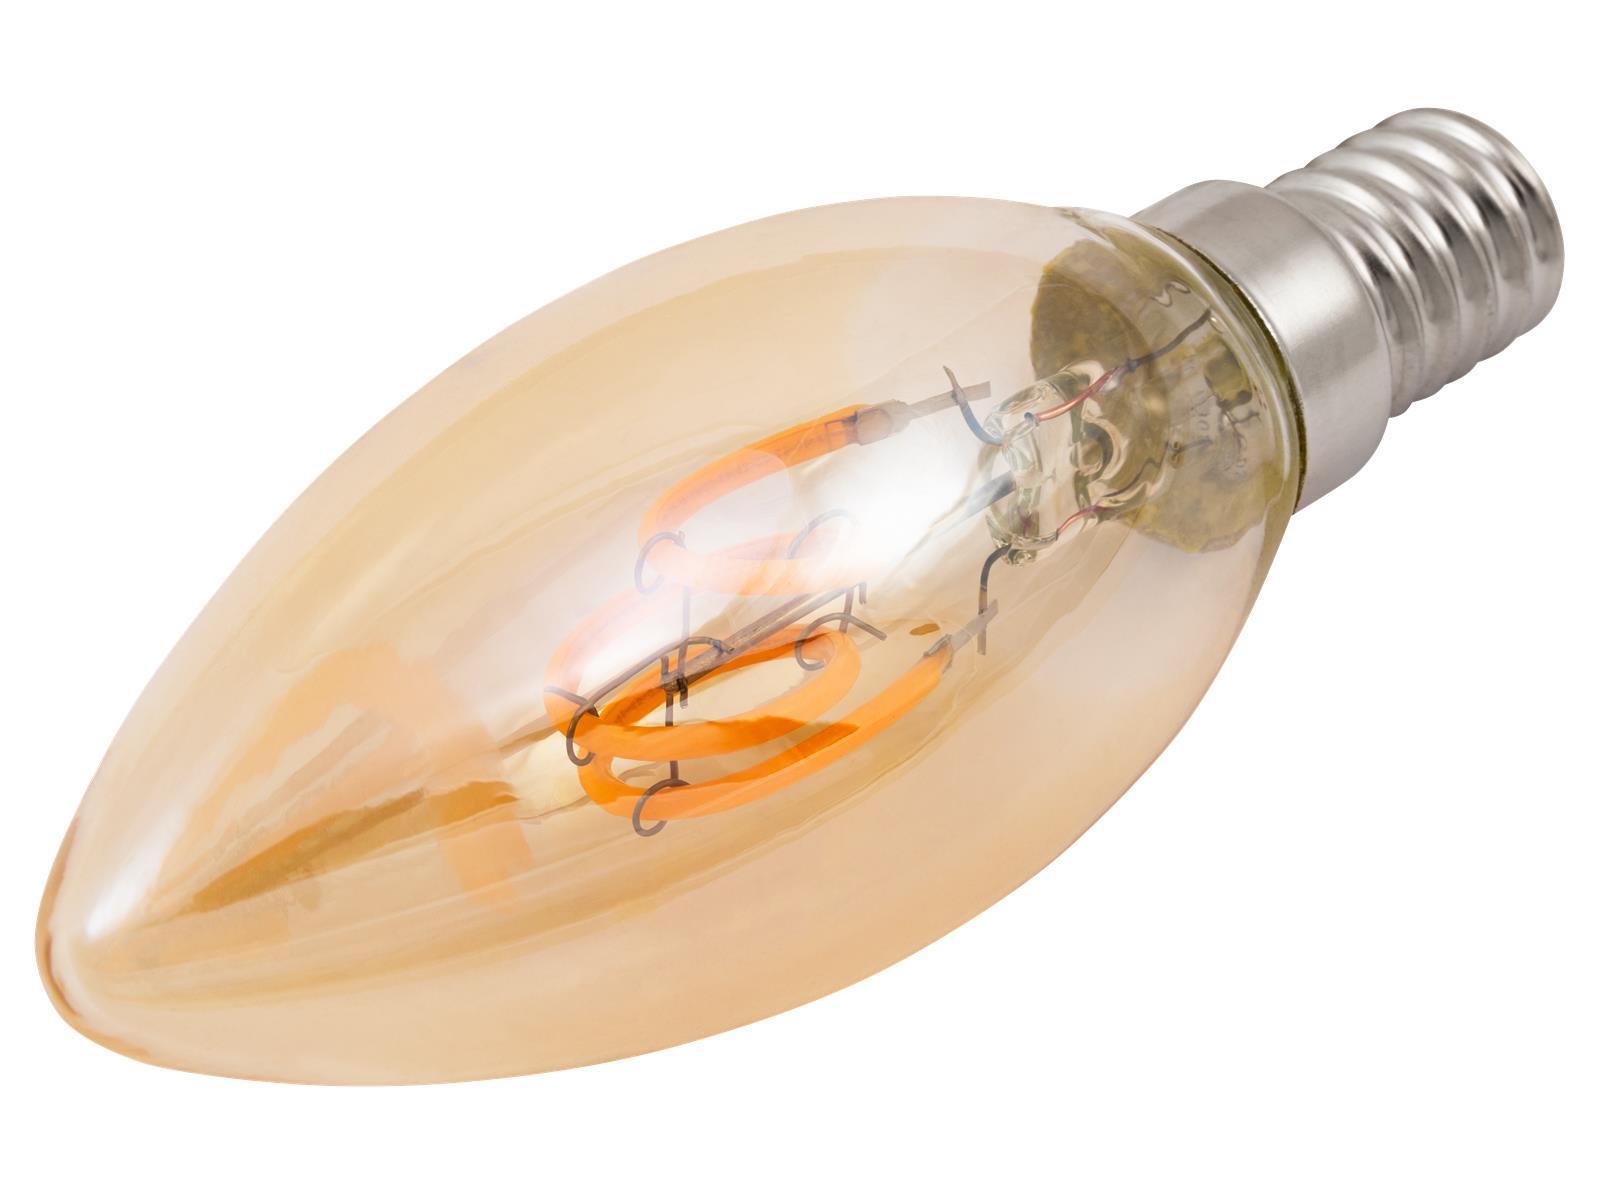 LED Filament Kerzenlampe McShine ''Retro'' E14, 1W, 90lm, warmweiß, goldenes Glas